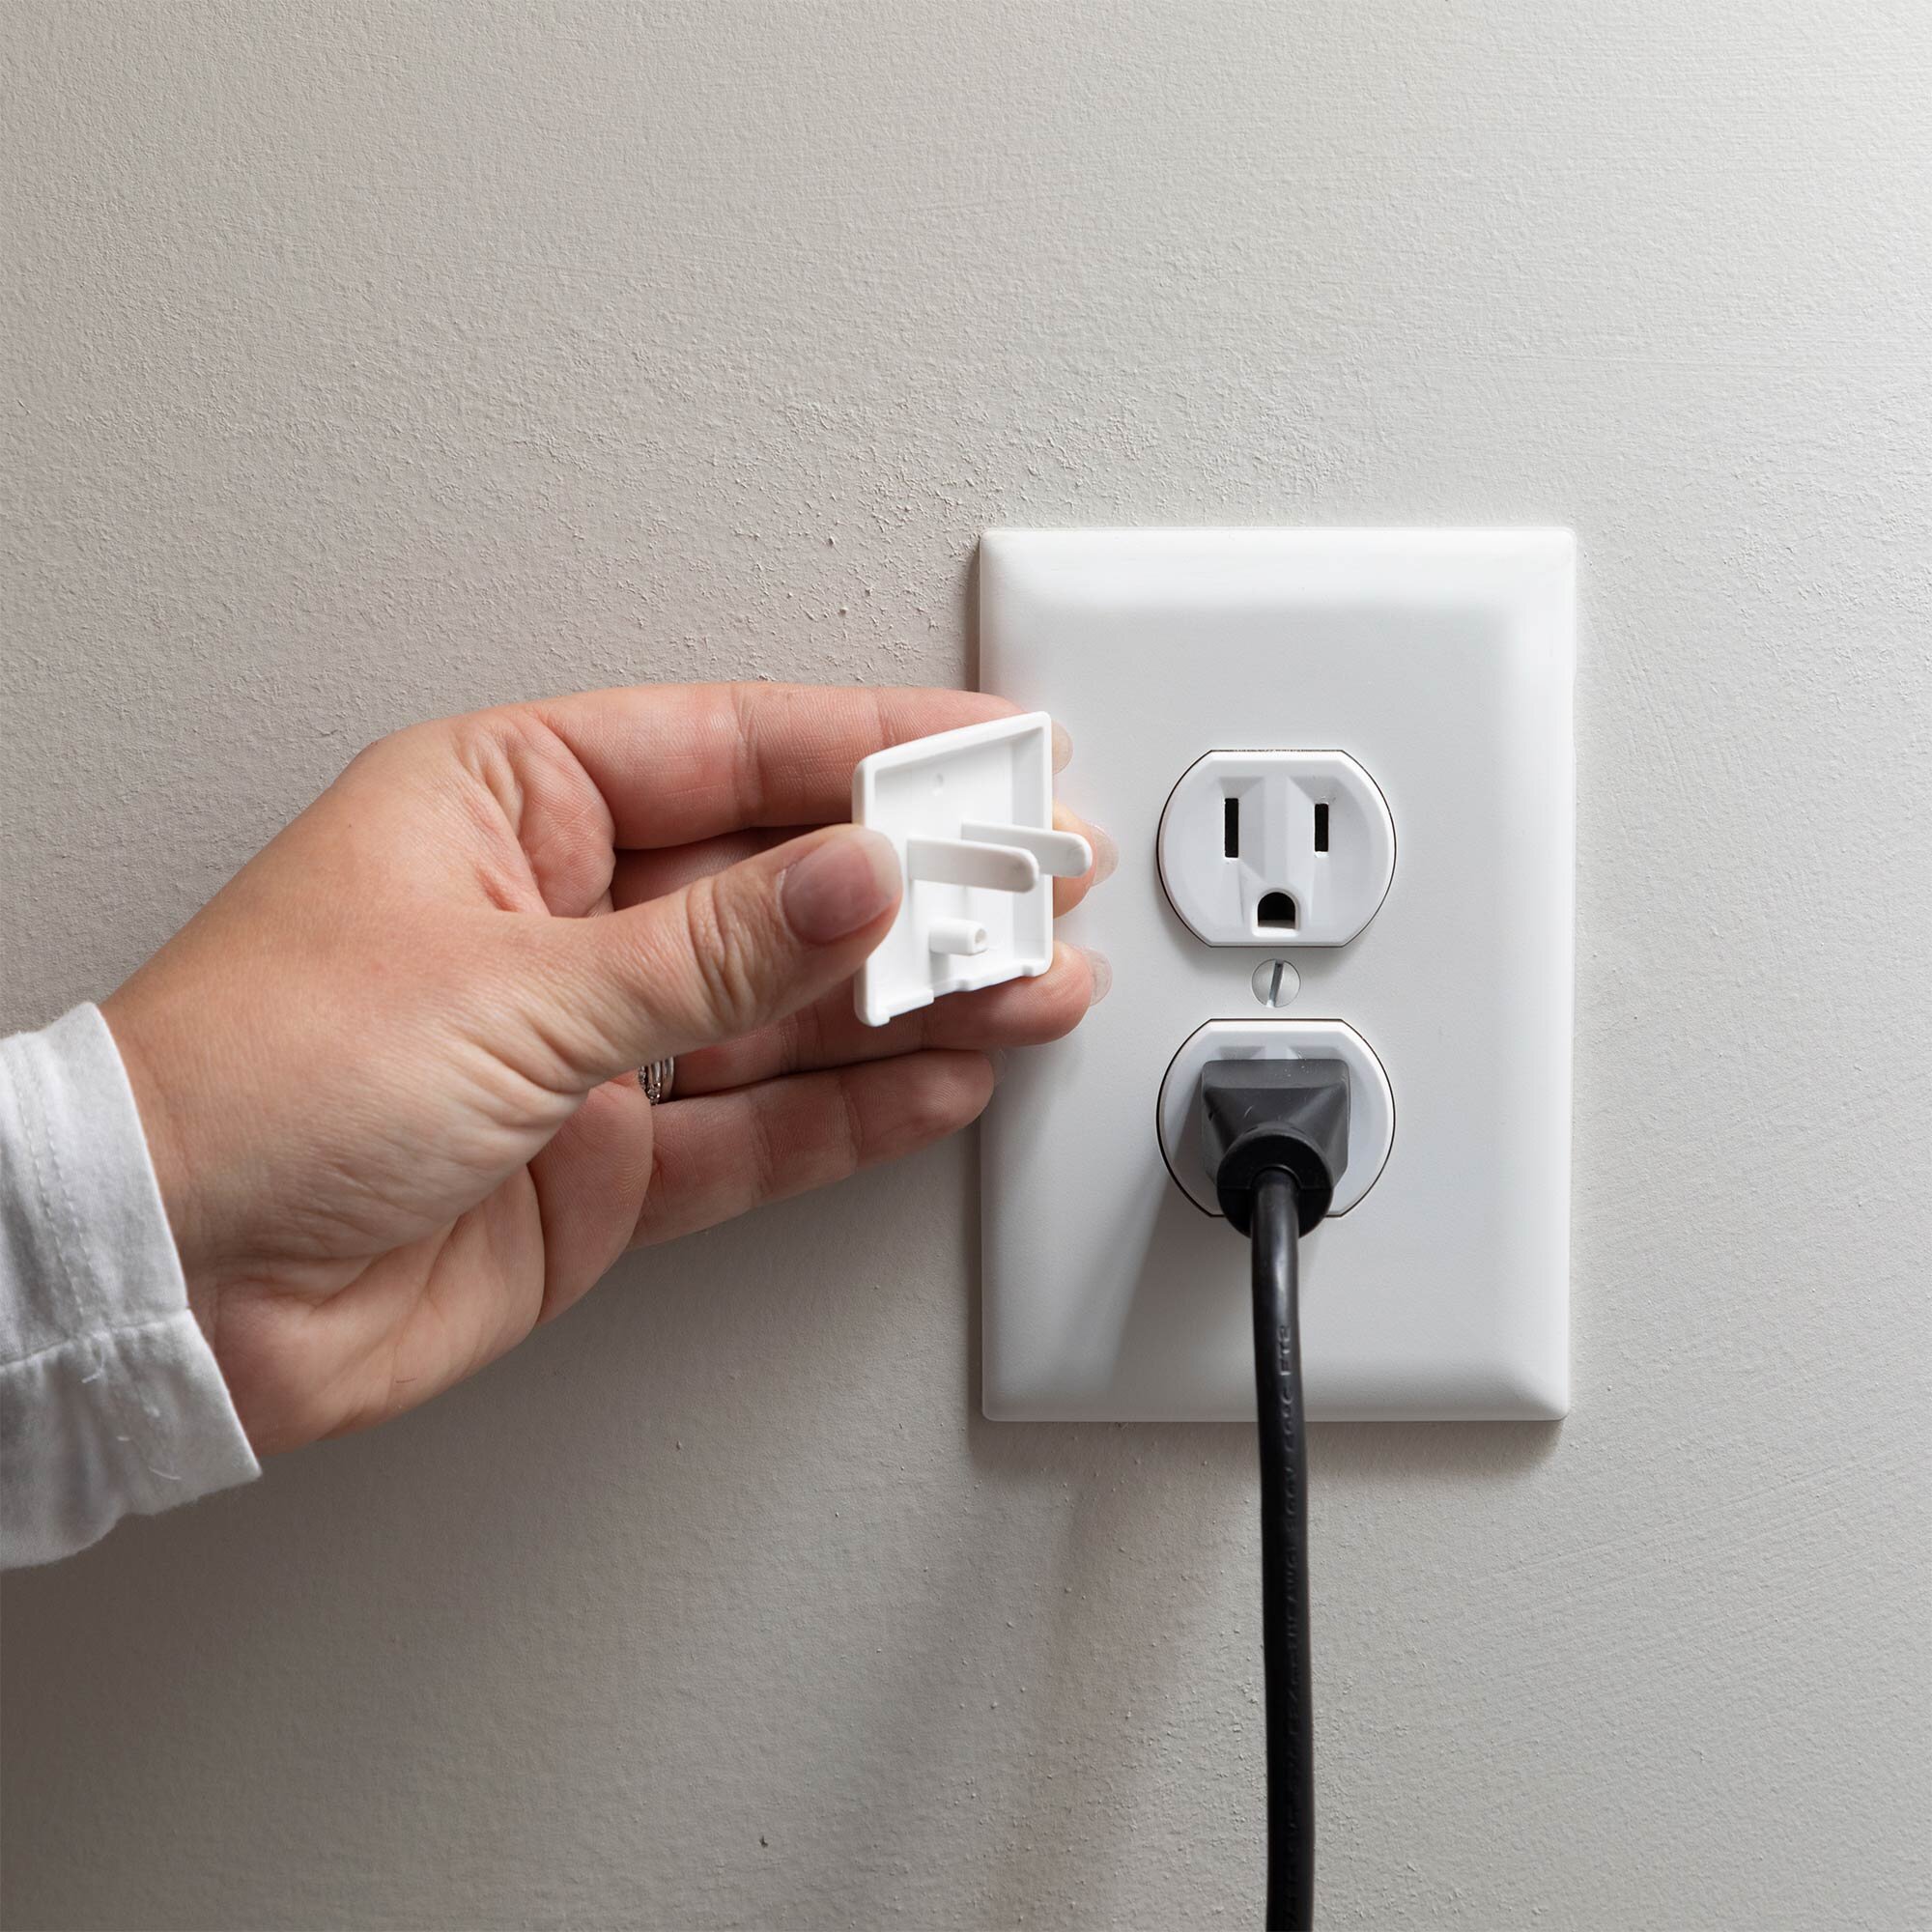 Installing StayPut® Single Outlet Plug